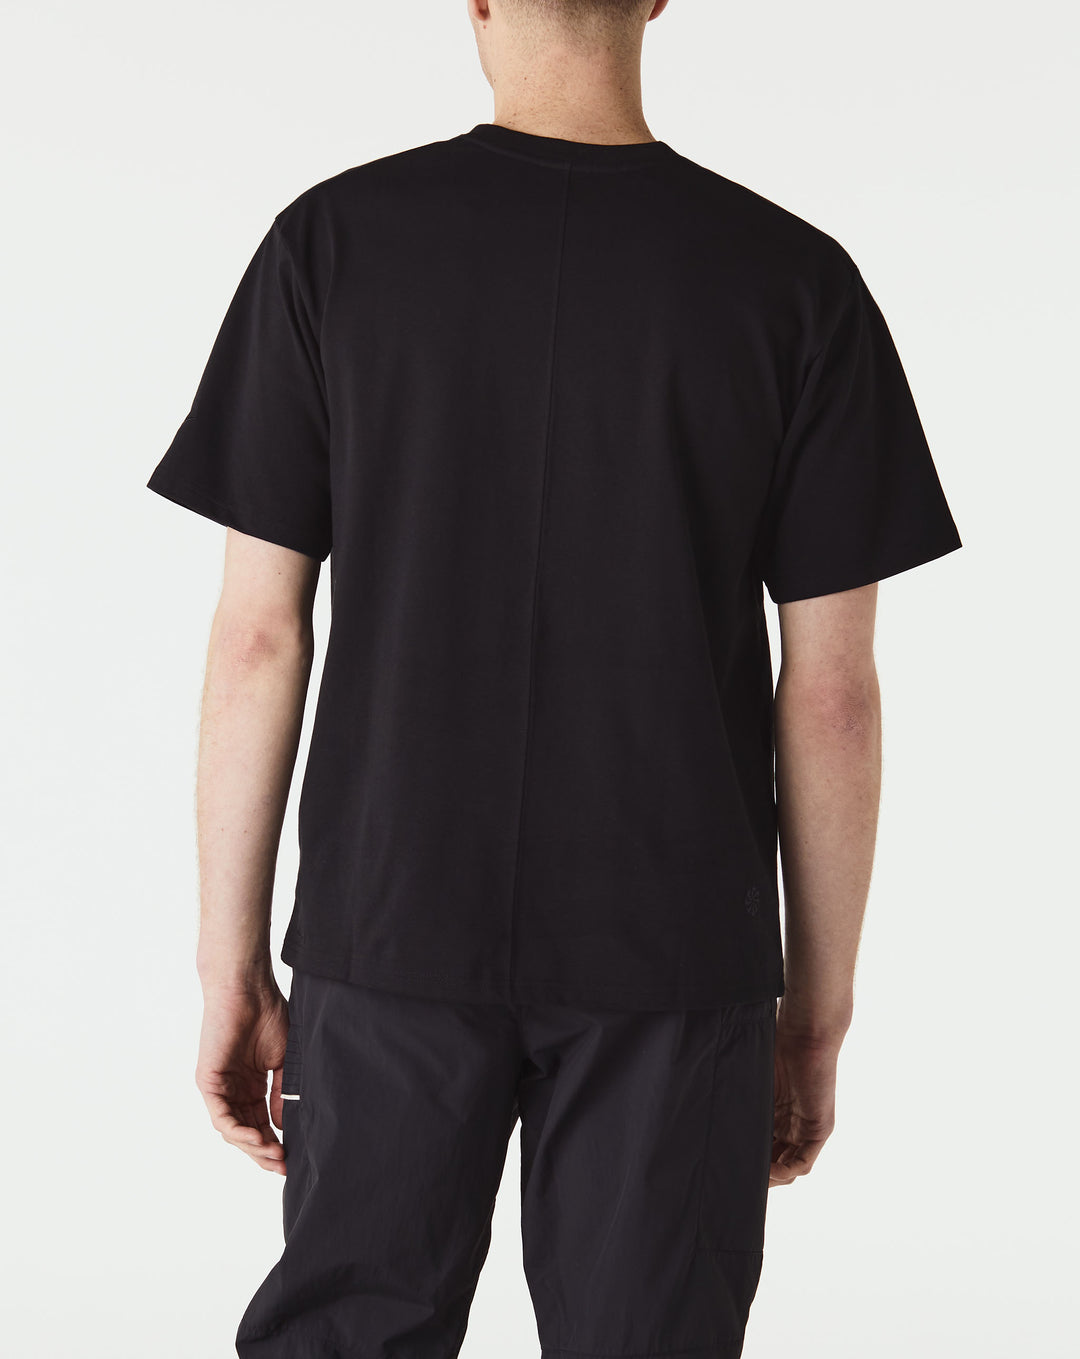 Nike Tech Pack Dri-FIT T-Shirt  - XHIBITION